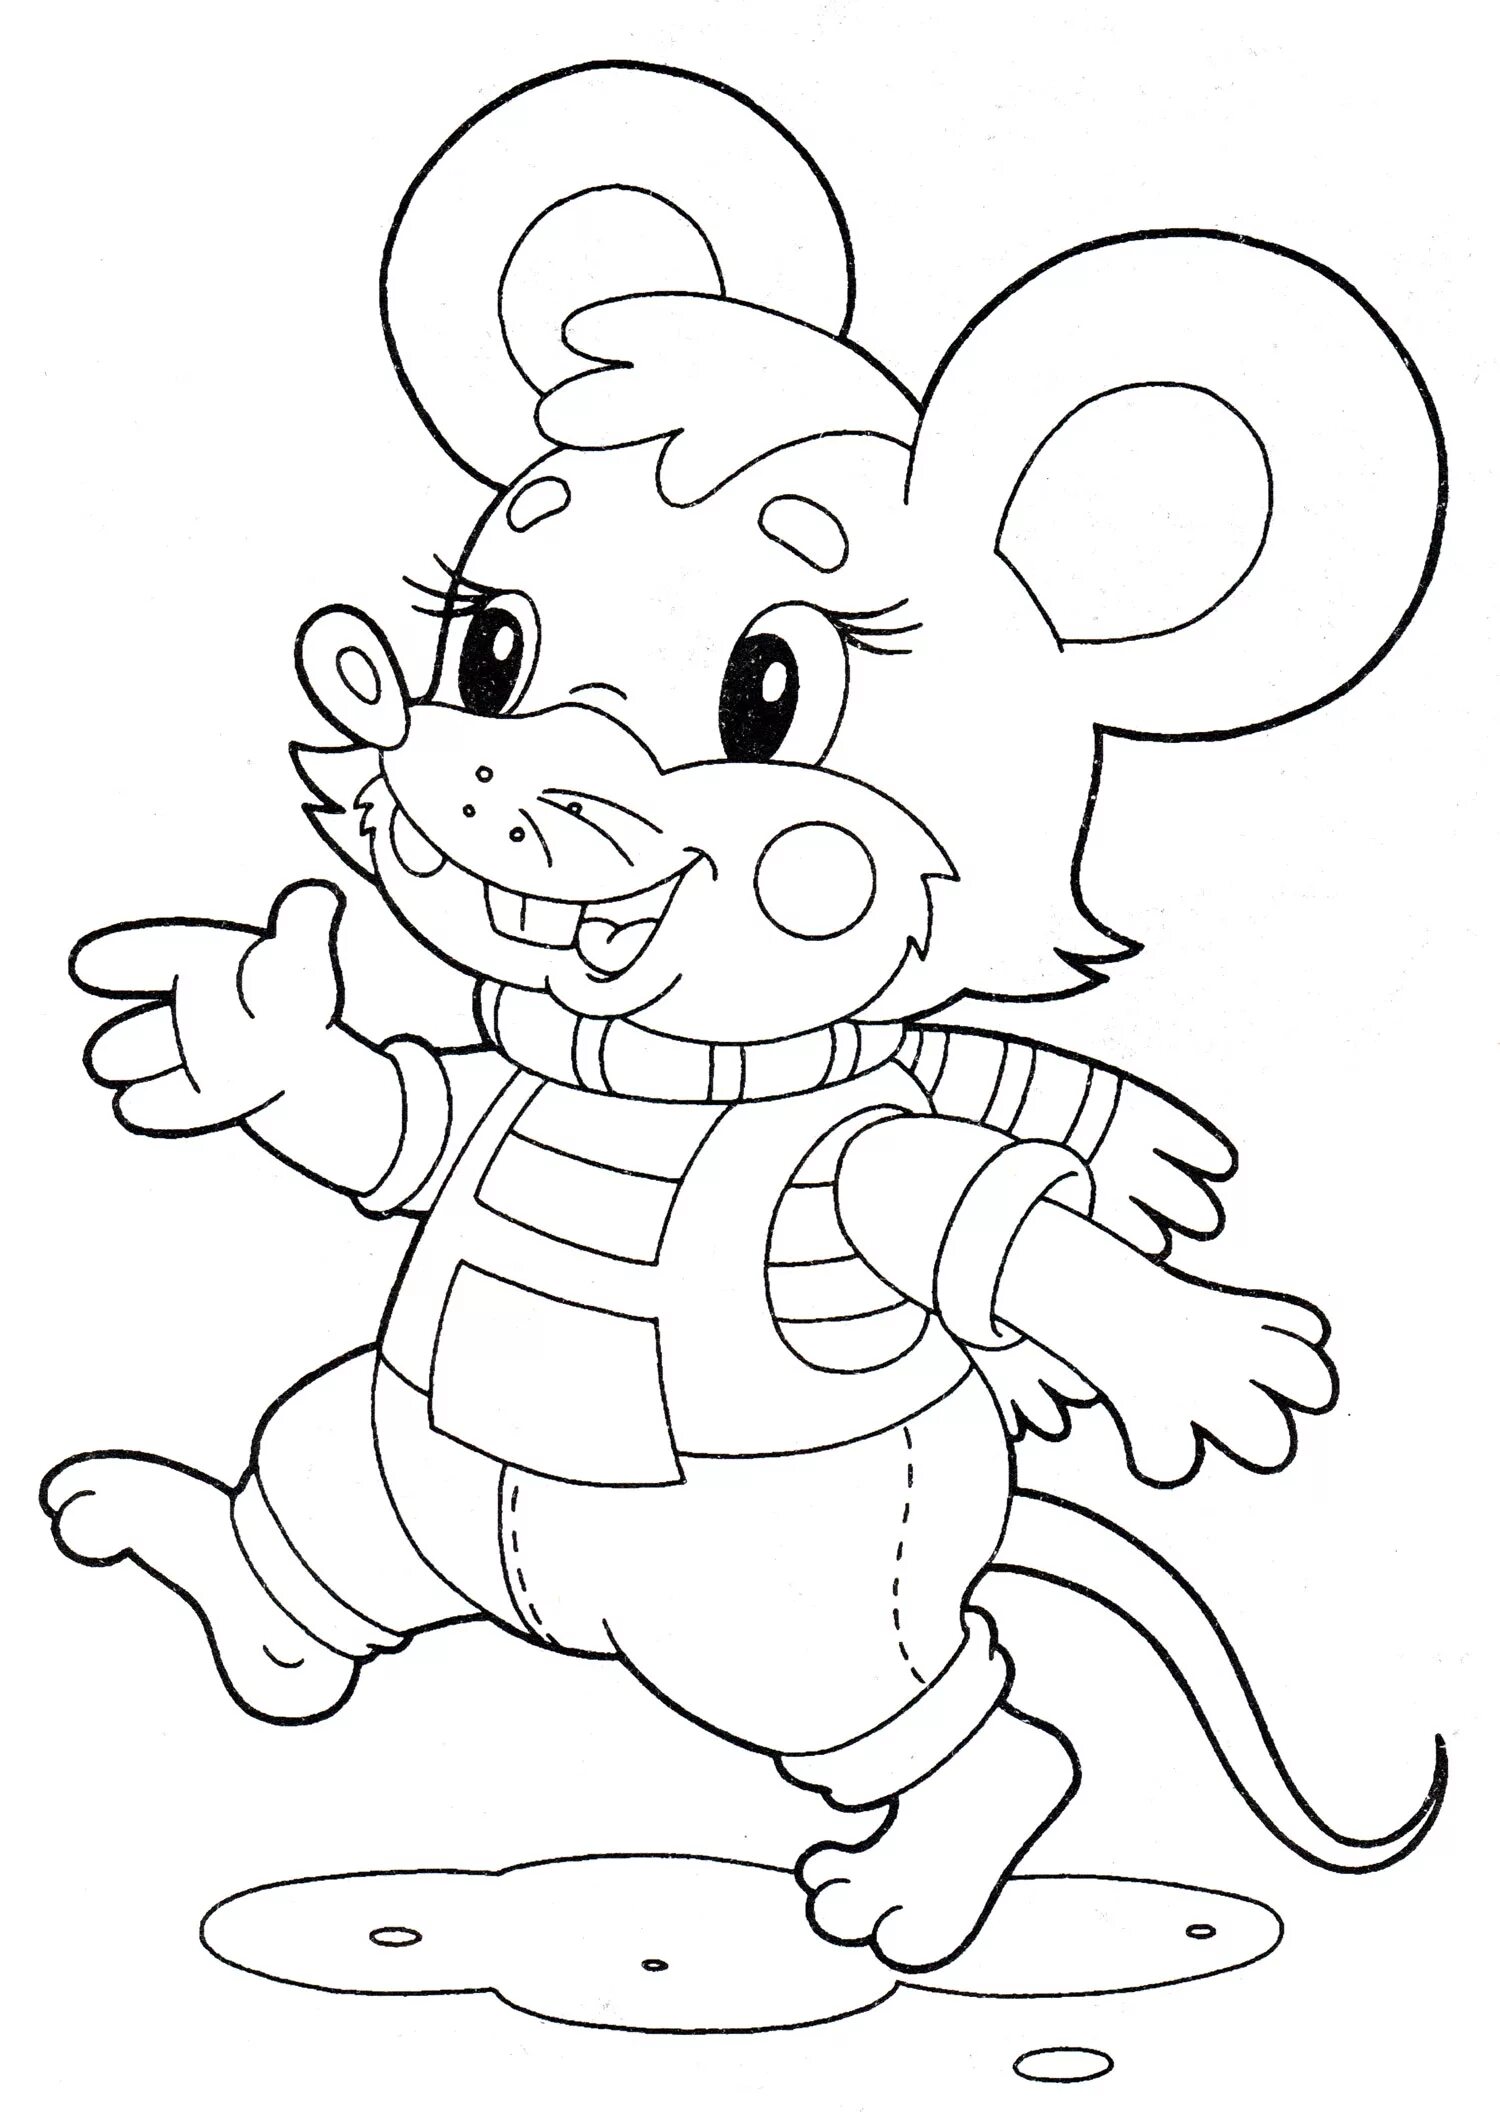 Раскраска мышка. Мышонок раскраска для детей. Раскраска Веселые зверята. Мышка норушка раскраска. Раскраска зверята распечатать